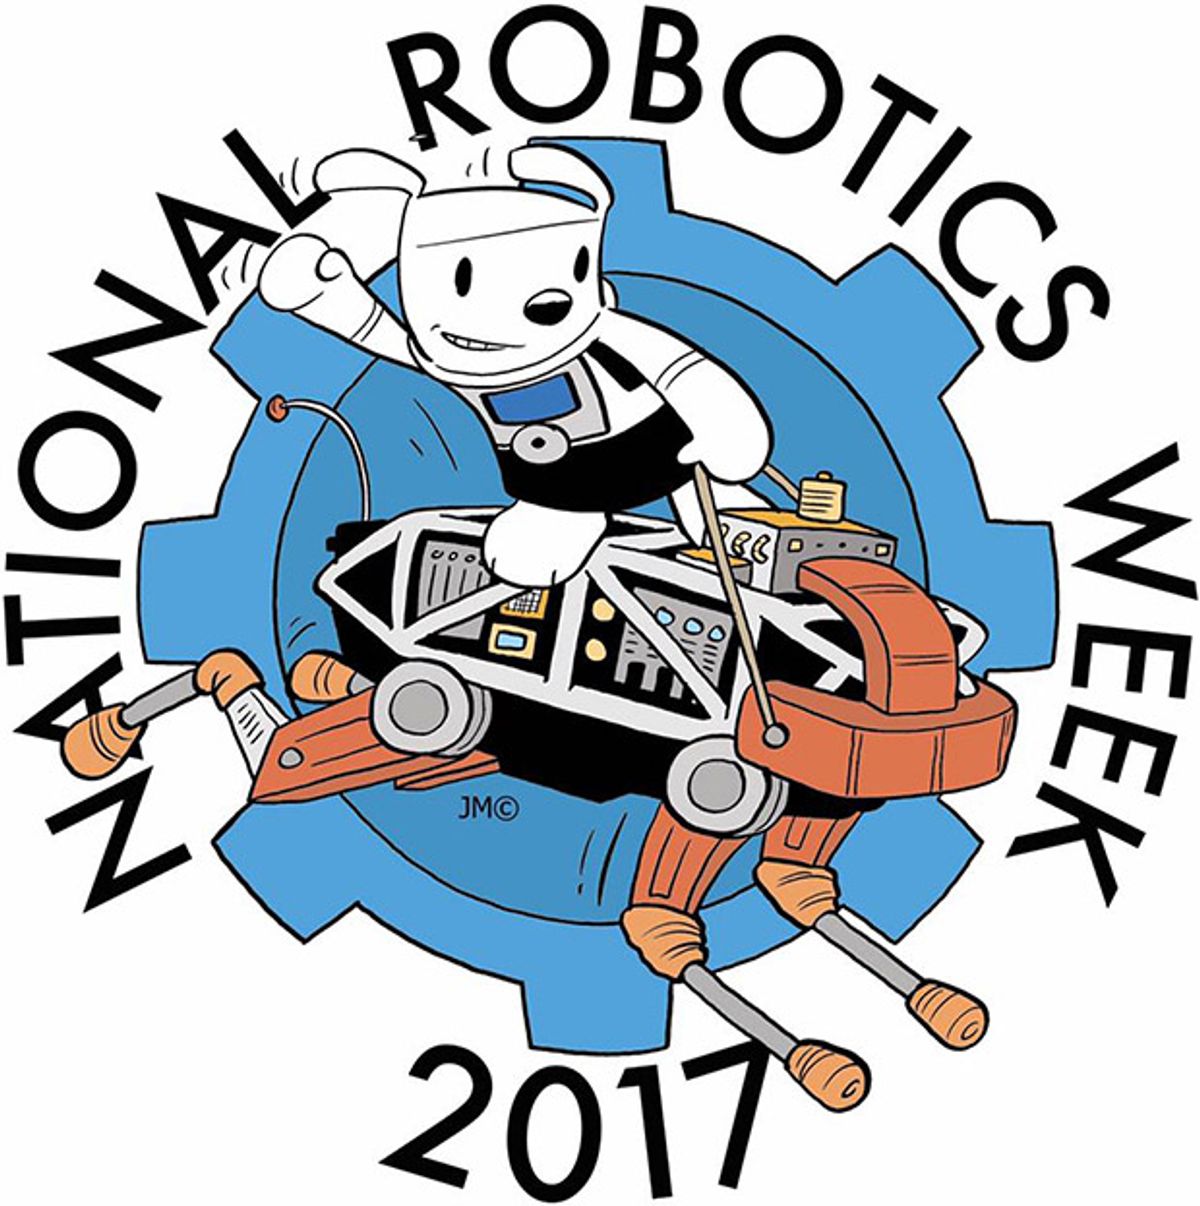 National Robotics Week